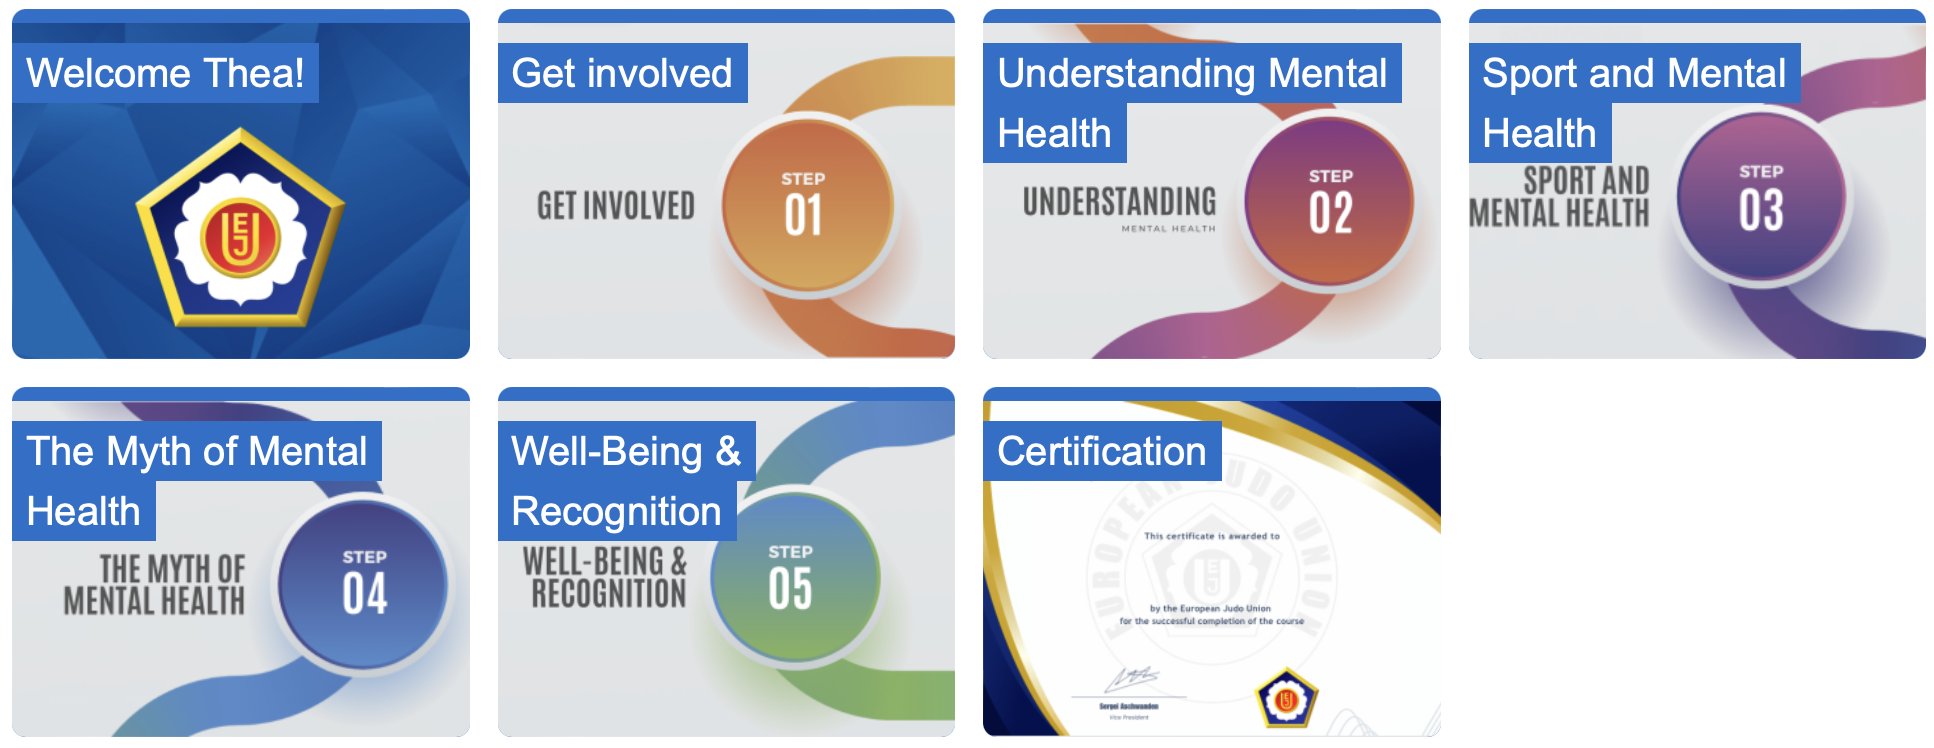 Mental Health E-Learning Course